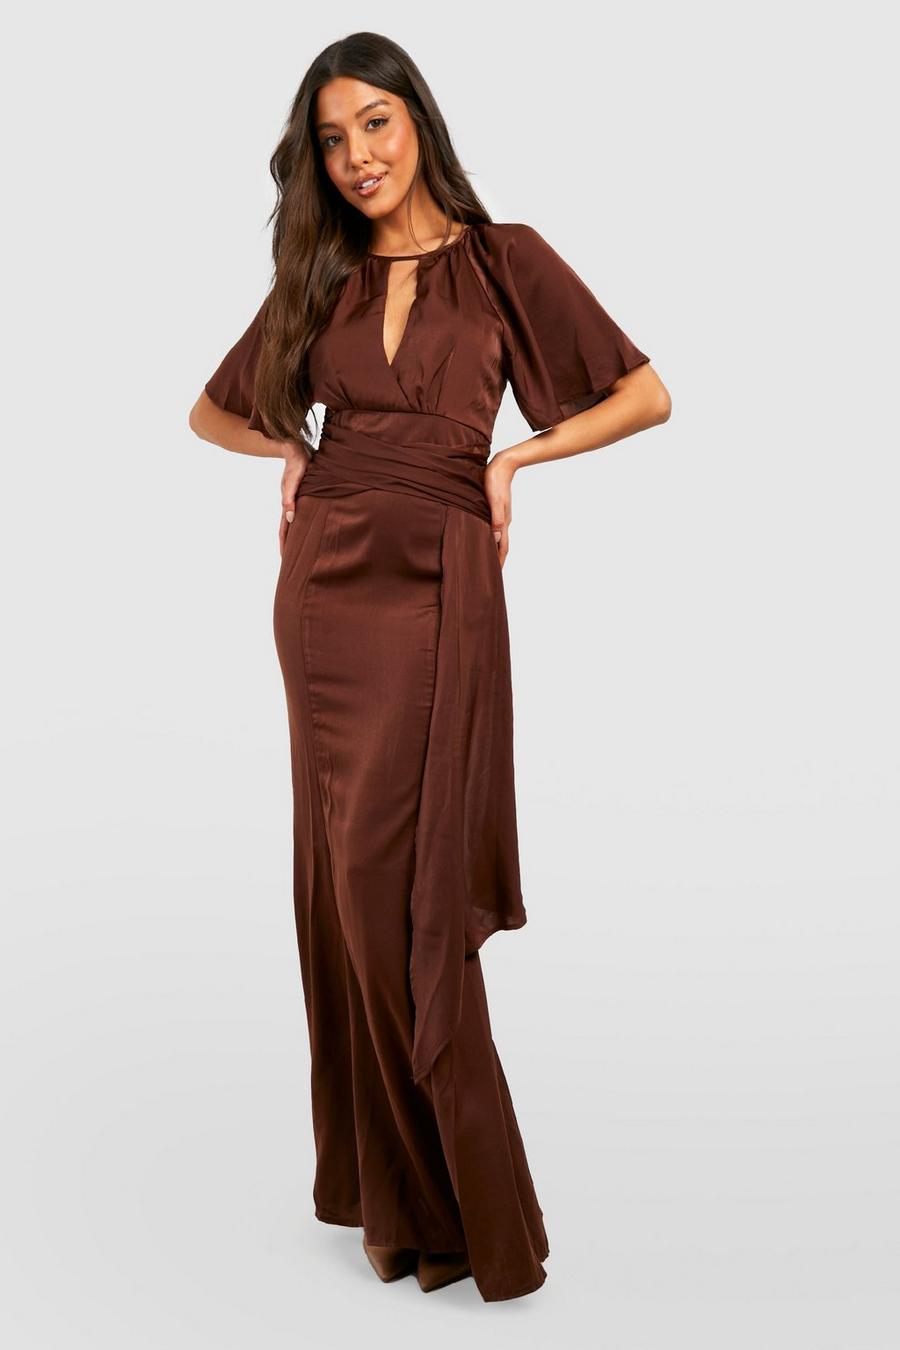 Chocolate brown Bridesmaid Chiffon Angel Sleeve Maxi Dress